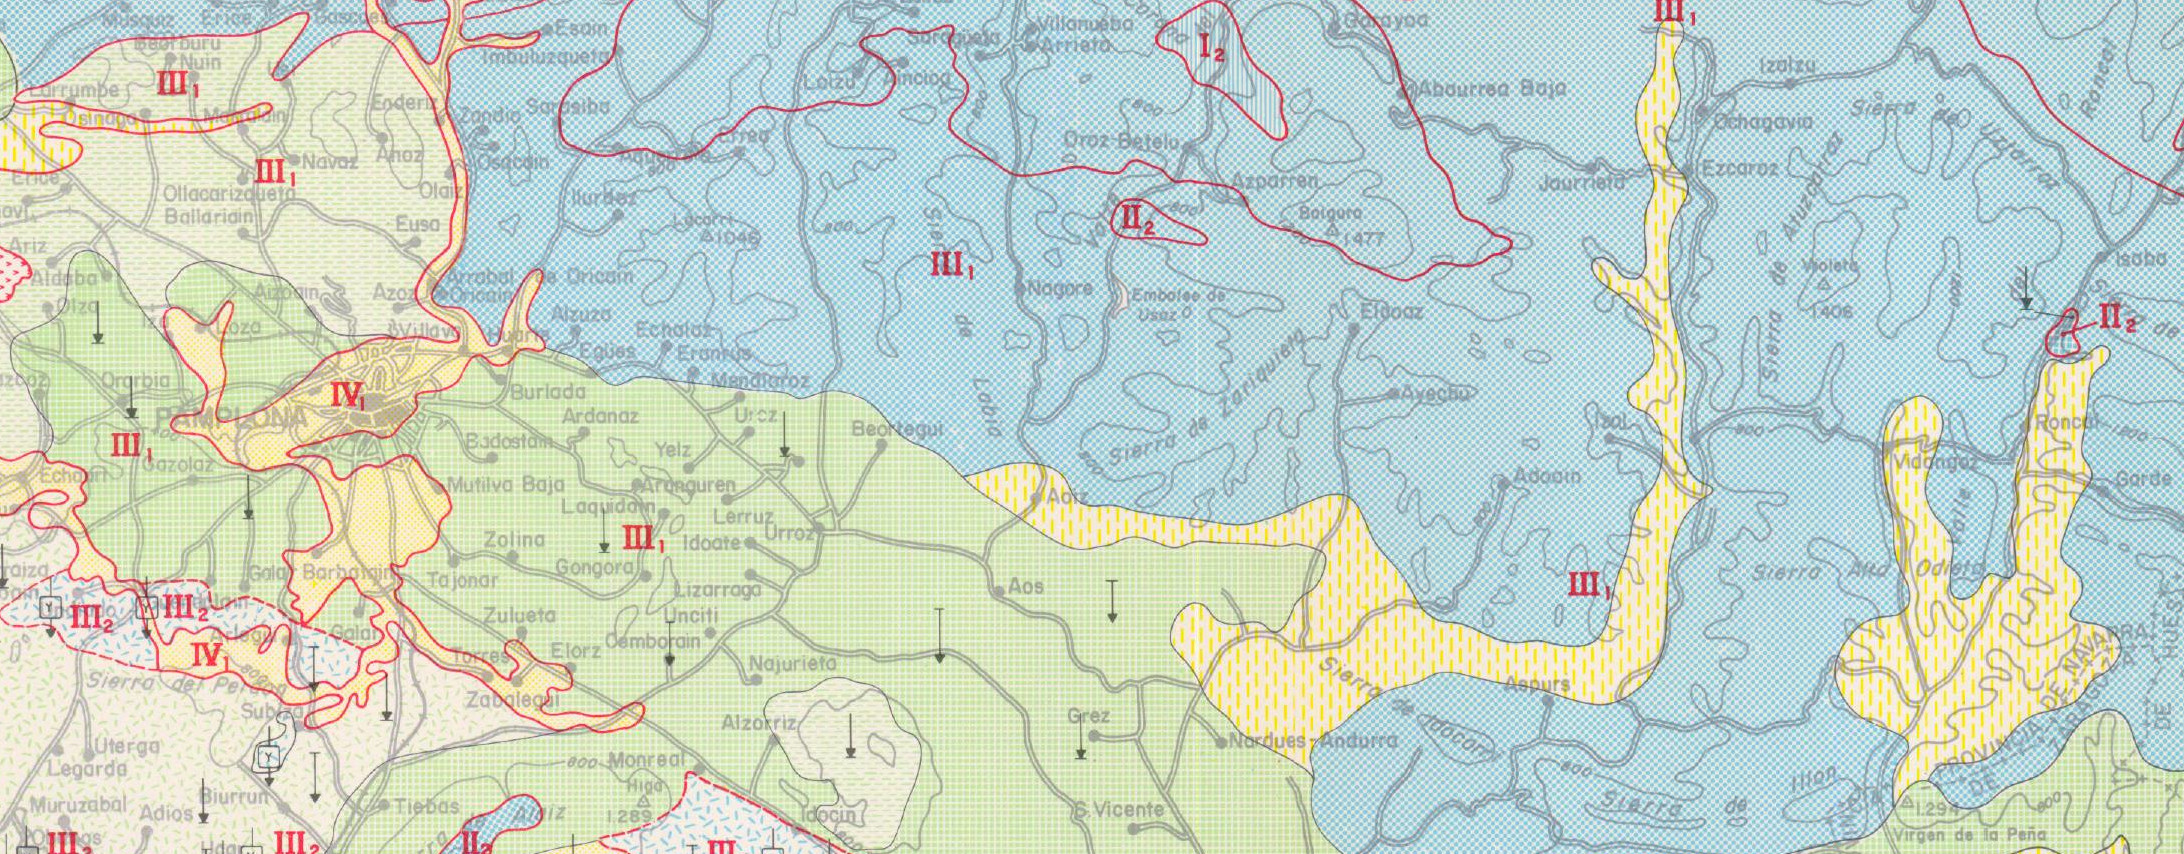 Mapa Geotécnico General a escala 1:200.000. Hoja 6-13 - Pamplona